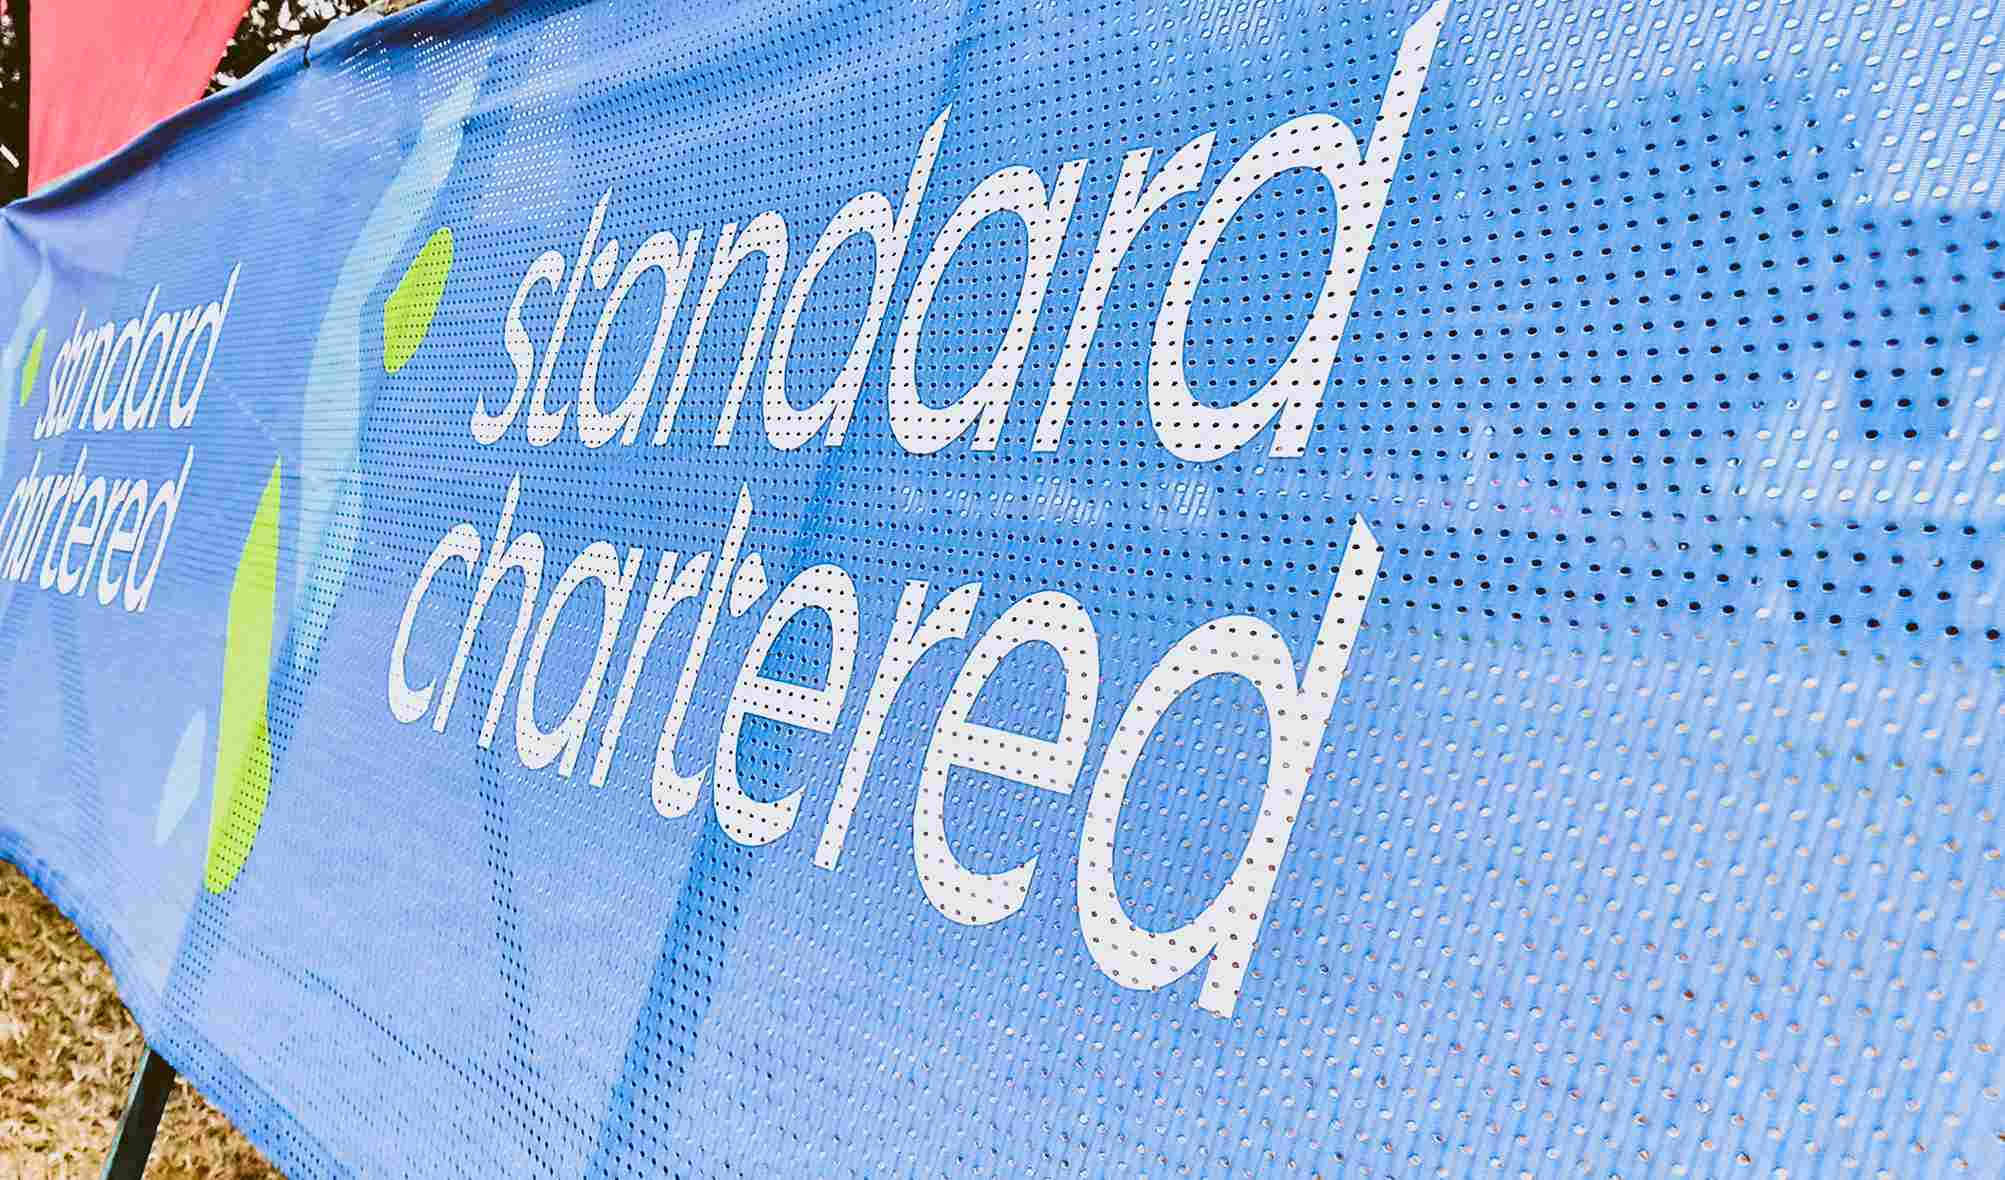 Standard Chartered Bank banner during the Stanchart nairobi Marathon preparations